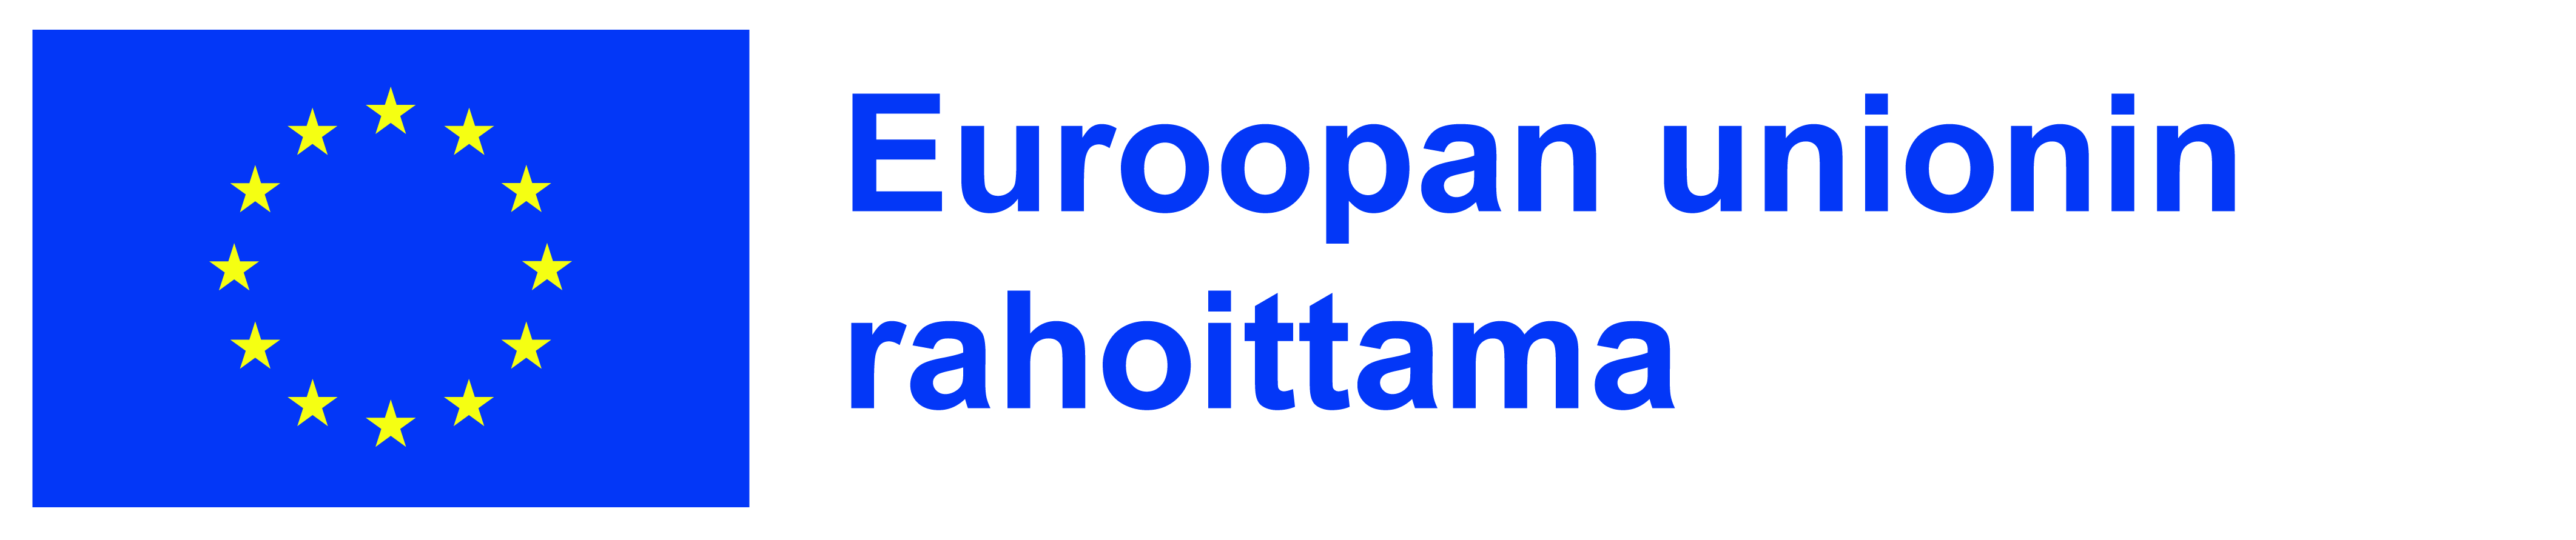 EU:n logo ja teksti: Euroopan unionin rahoittama